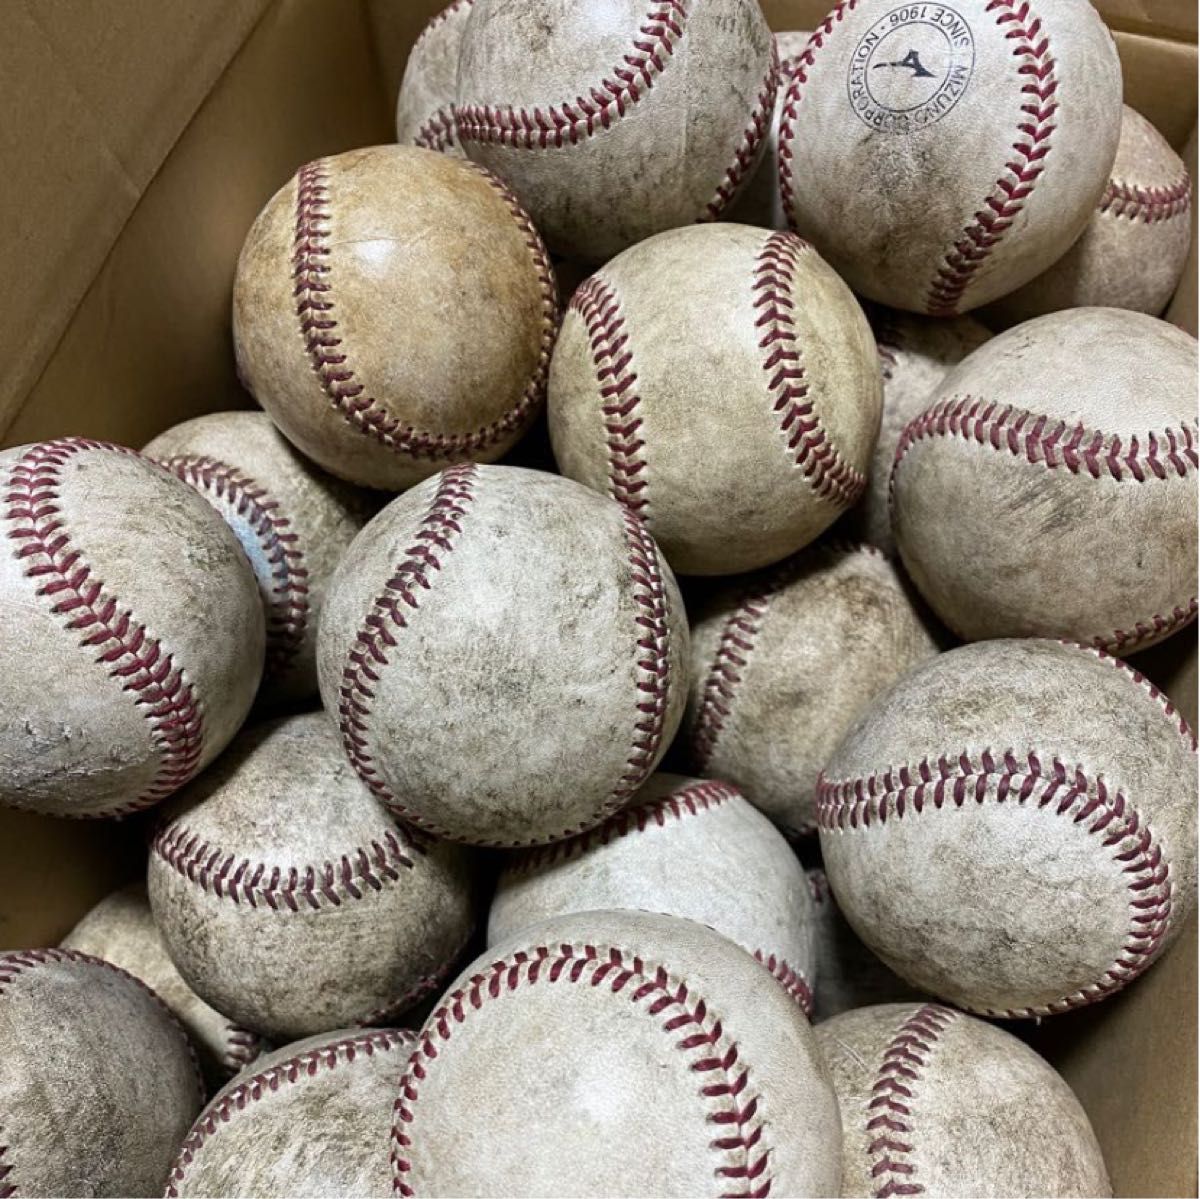 【送料無料】30球 硬式野球ボール 硬式ボール